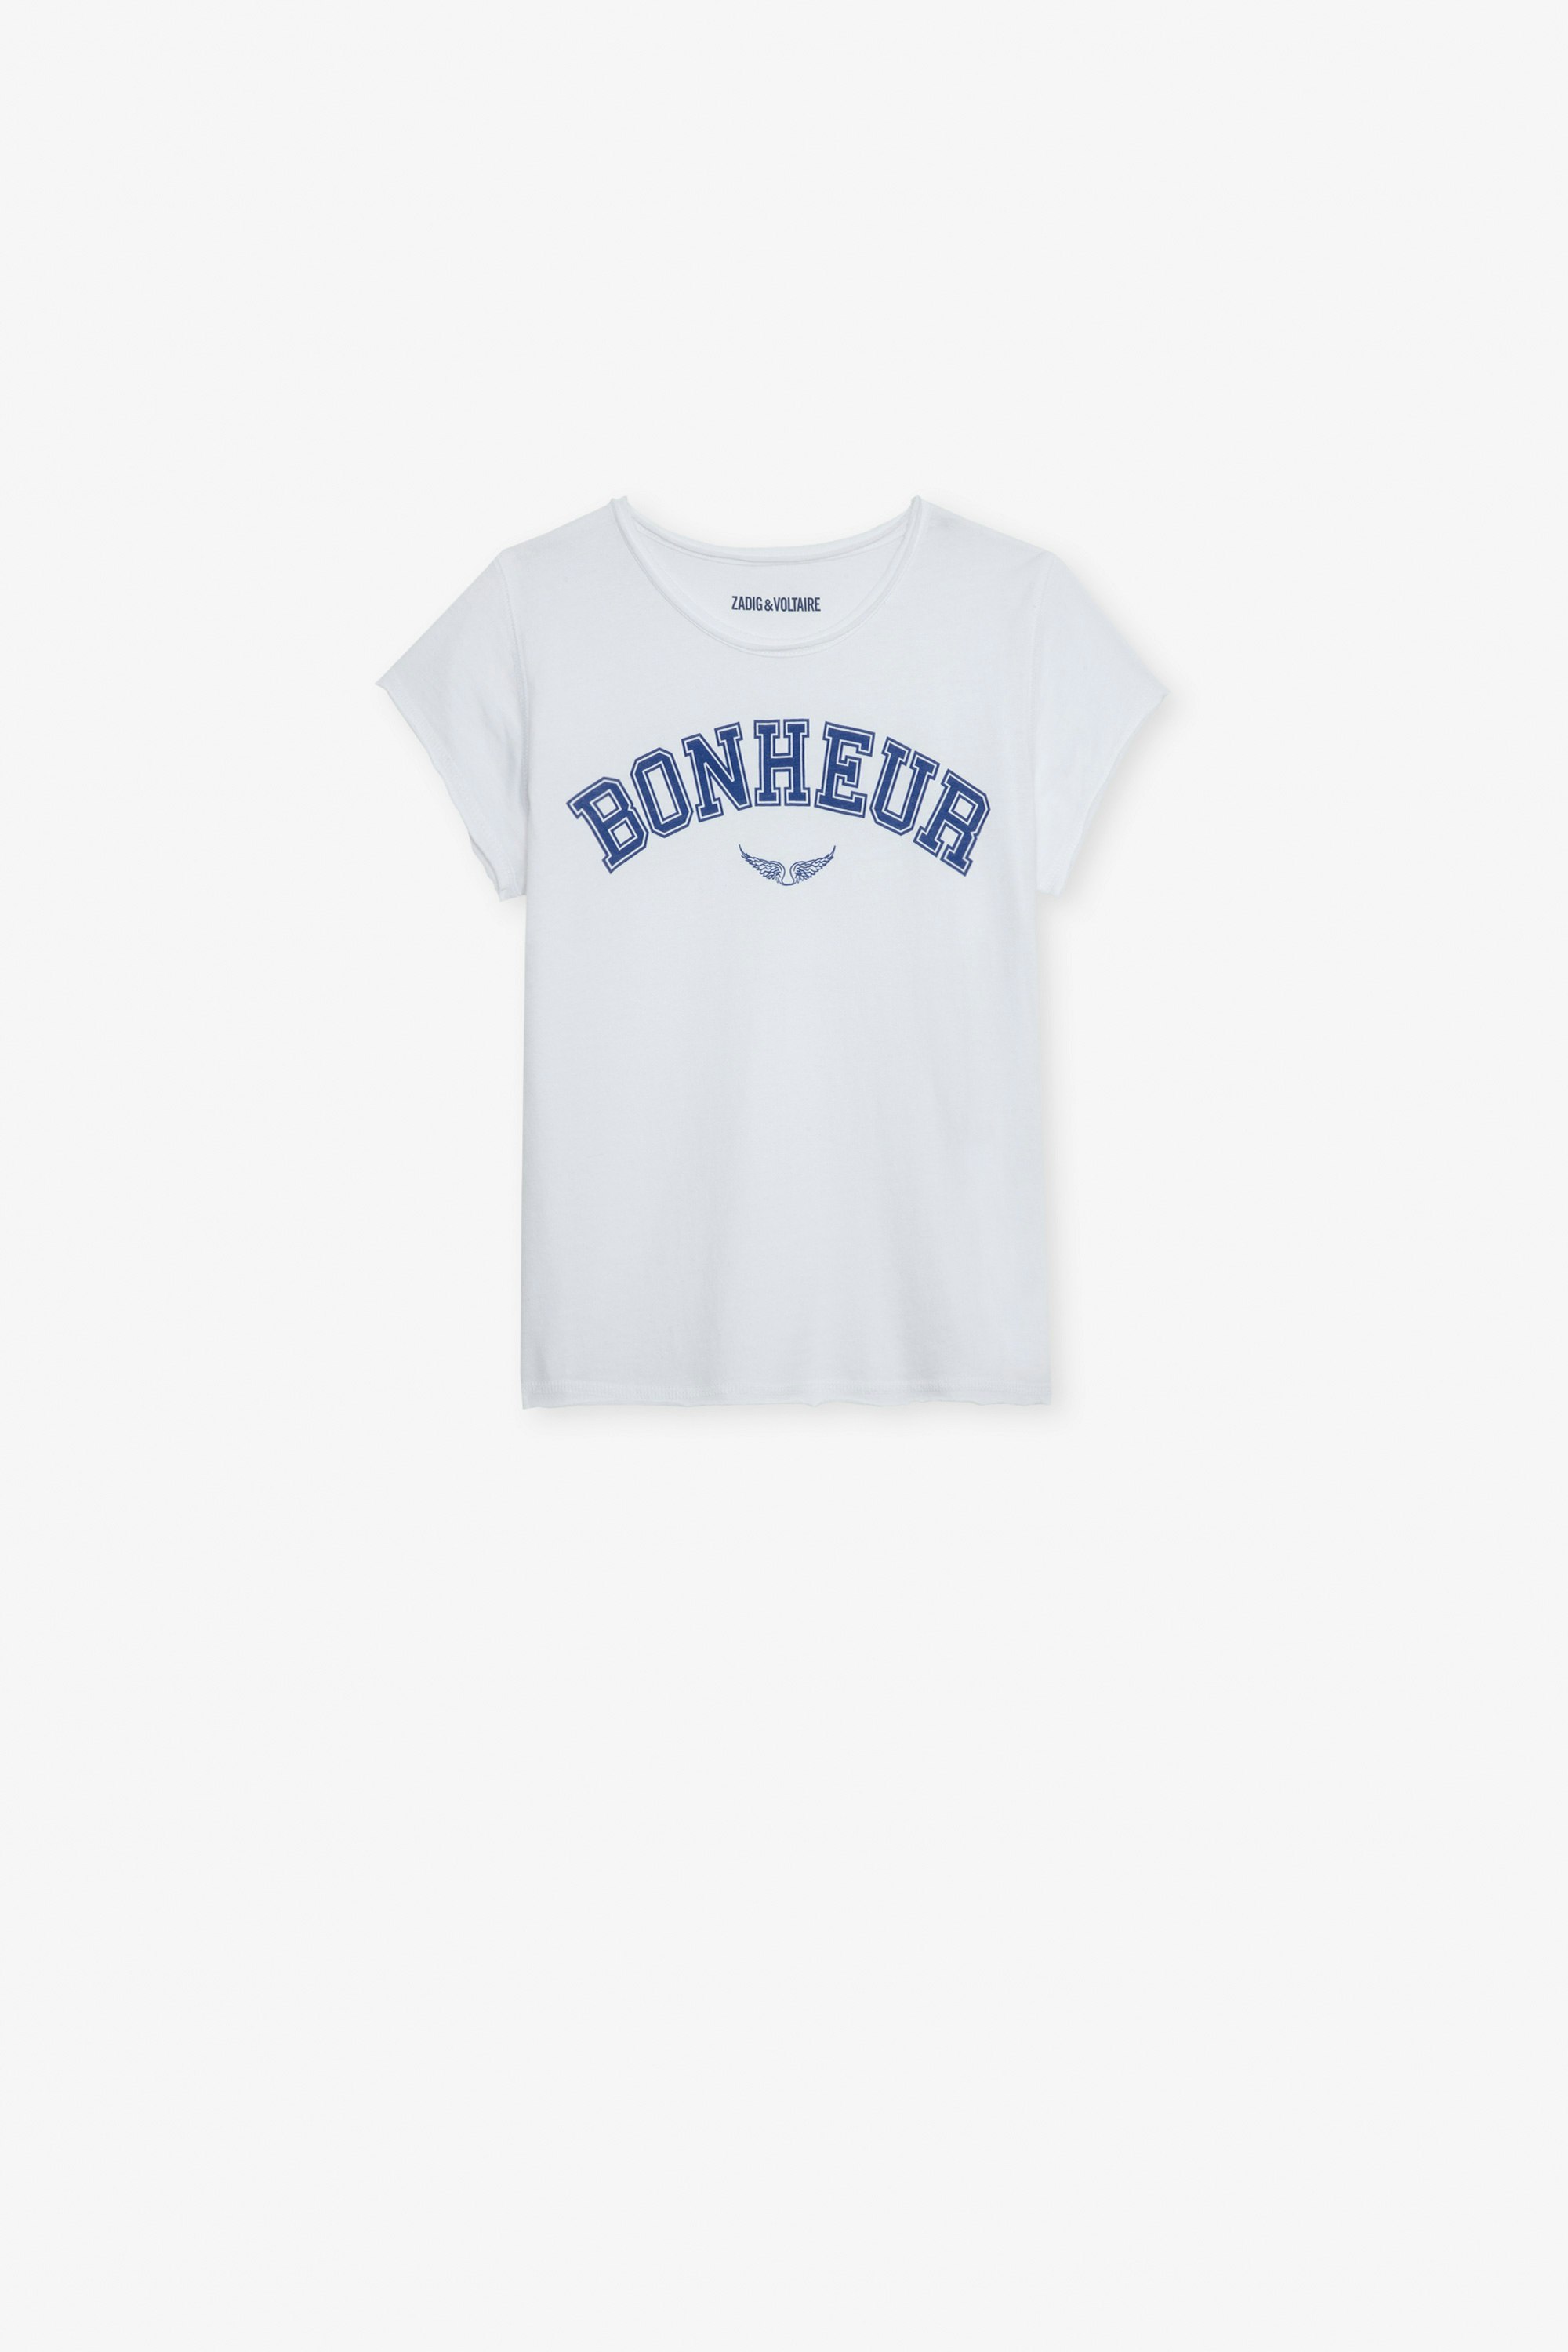 Camiseta Amber Niña - Camiseta blanca de punto de algodón de manga corta con mensaje «Bonheur» para niña.